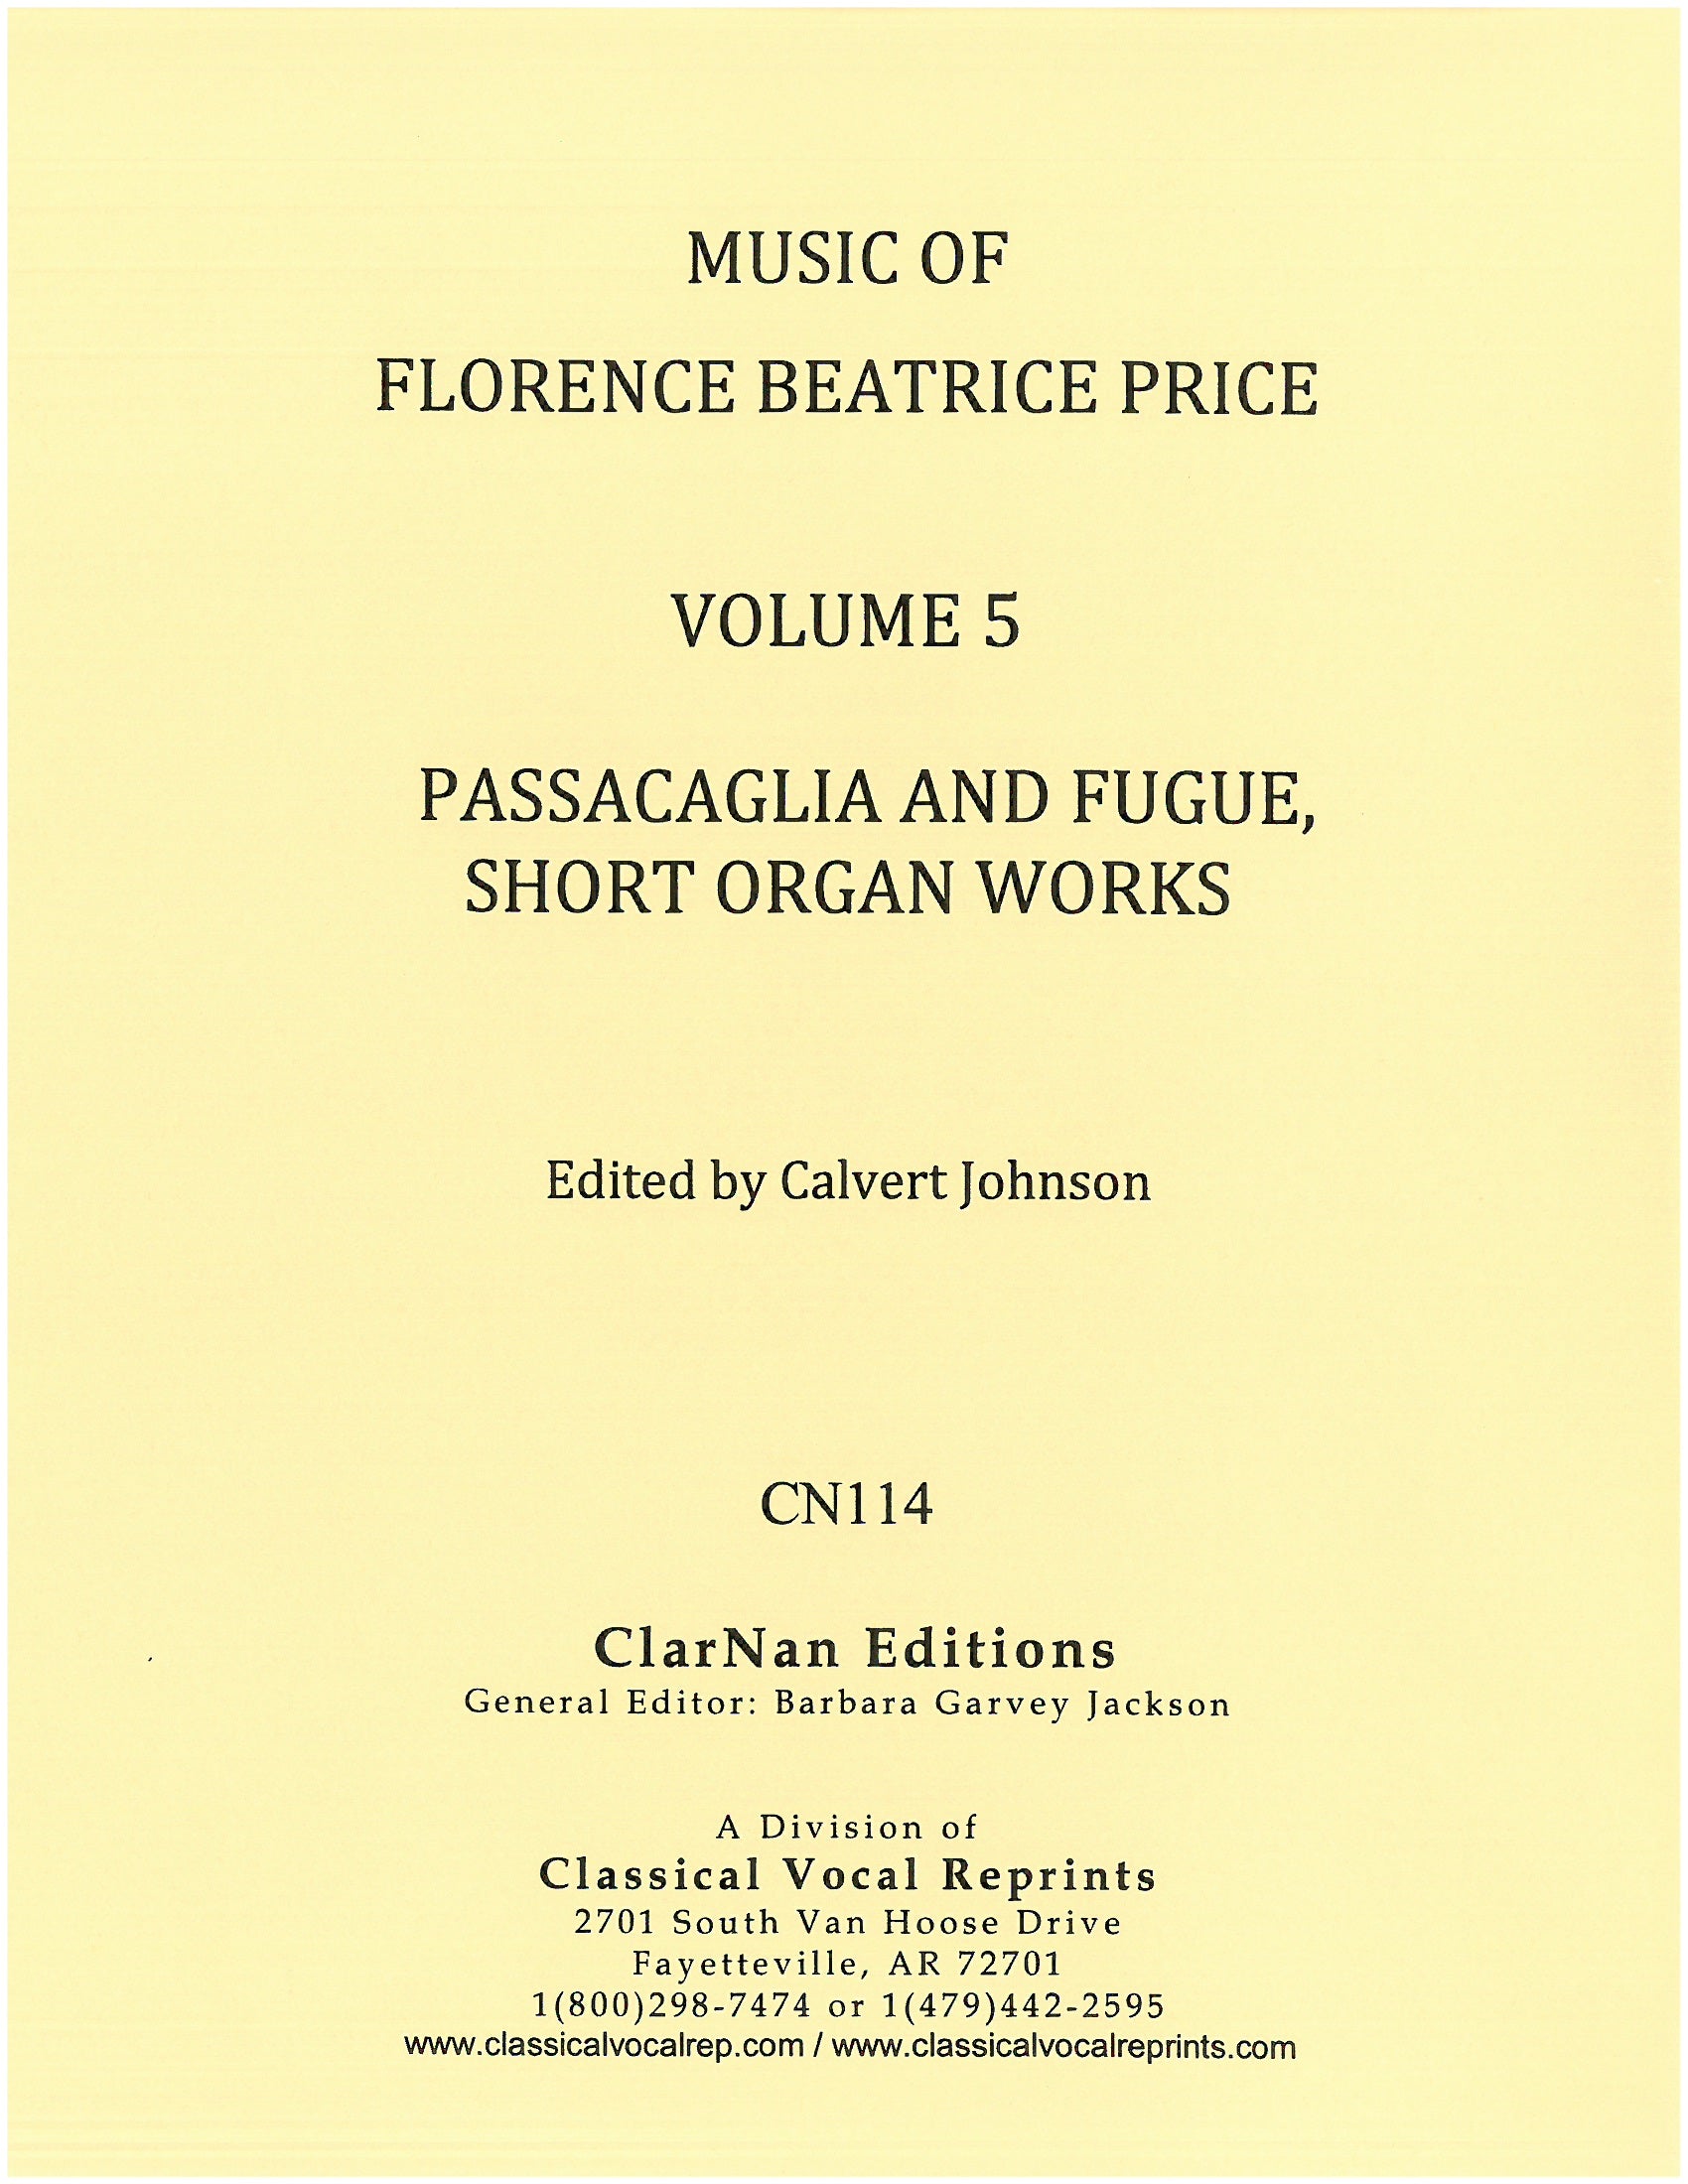 Price: Passacaglia and Fugue; Short Organ Works